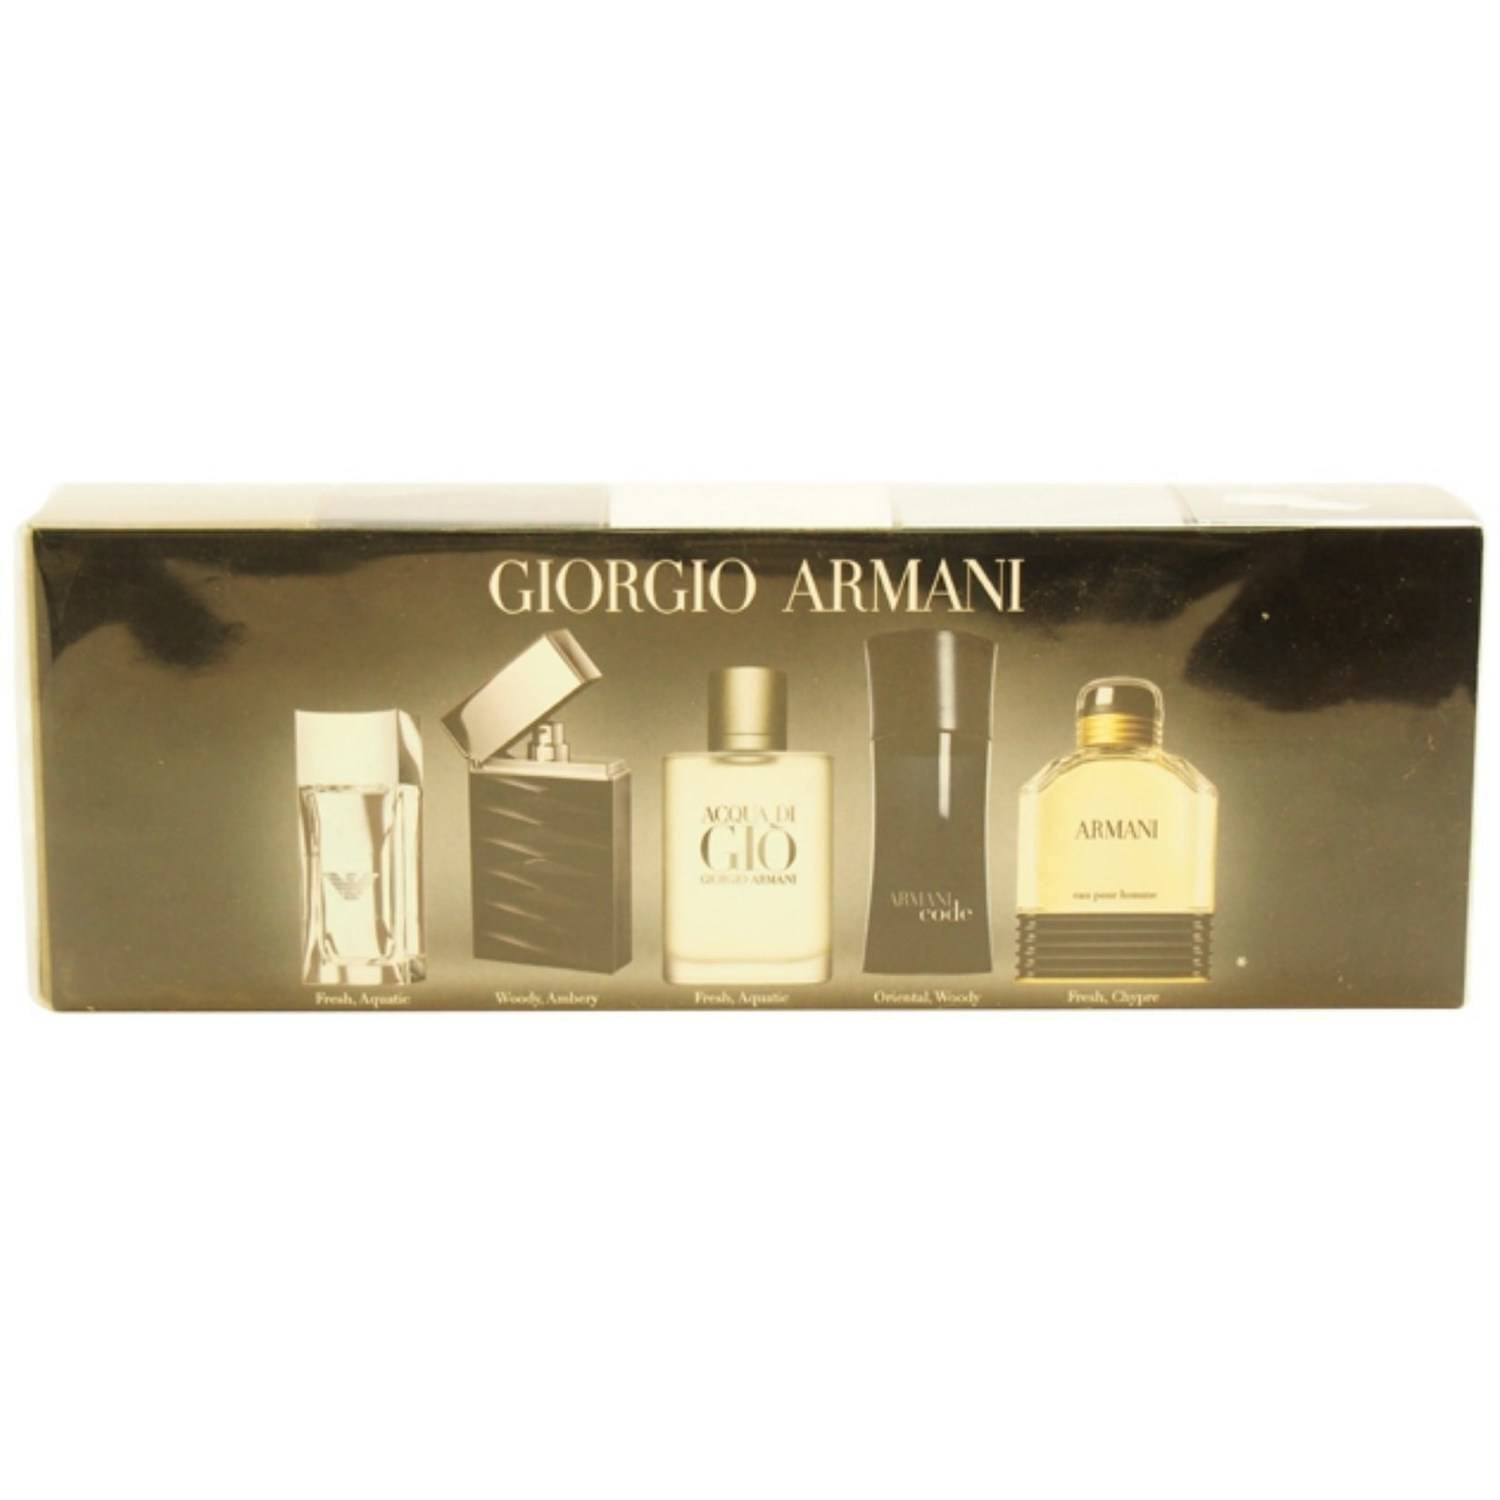 armani mini gift set